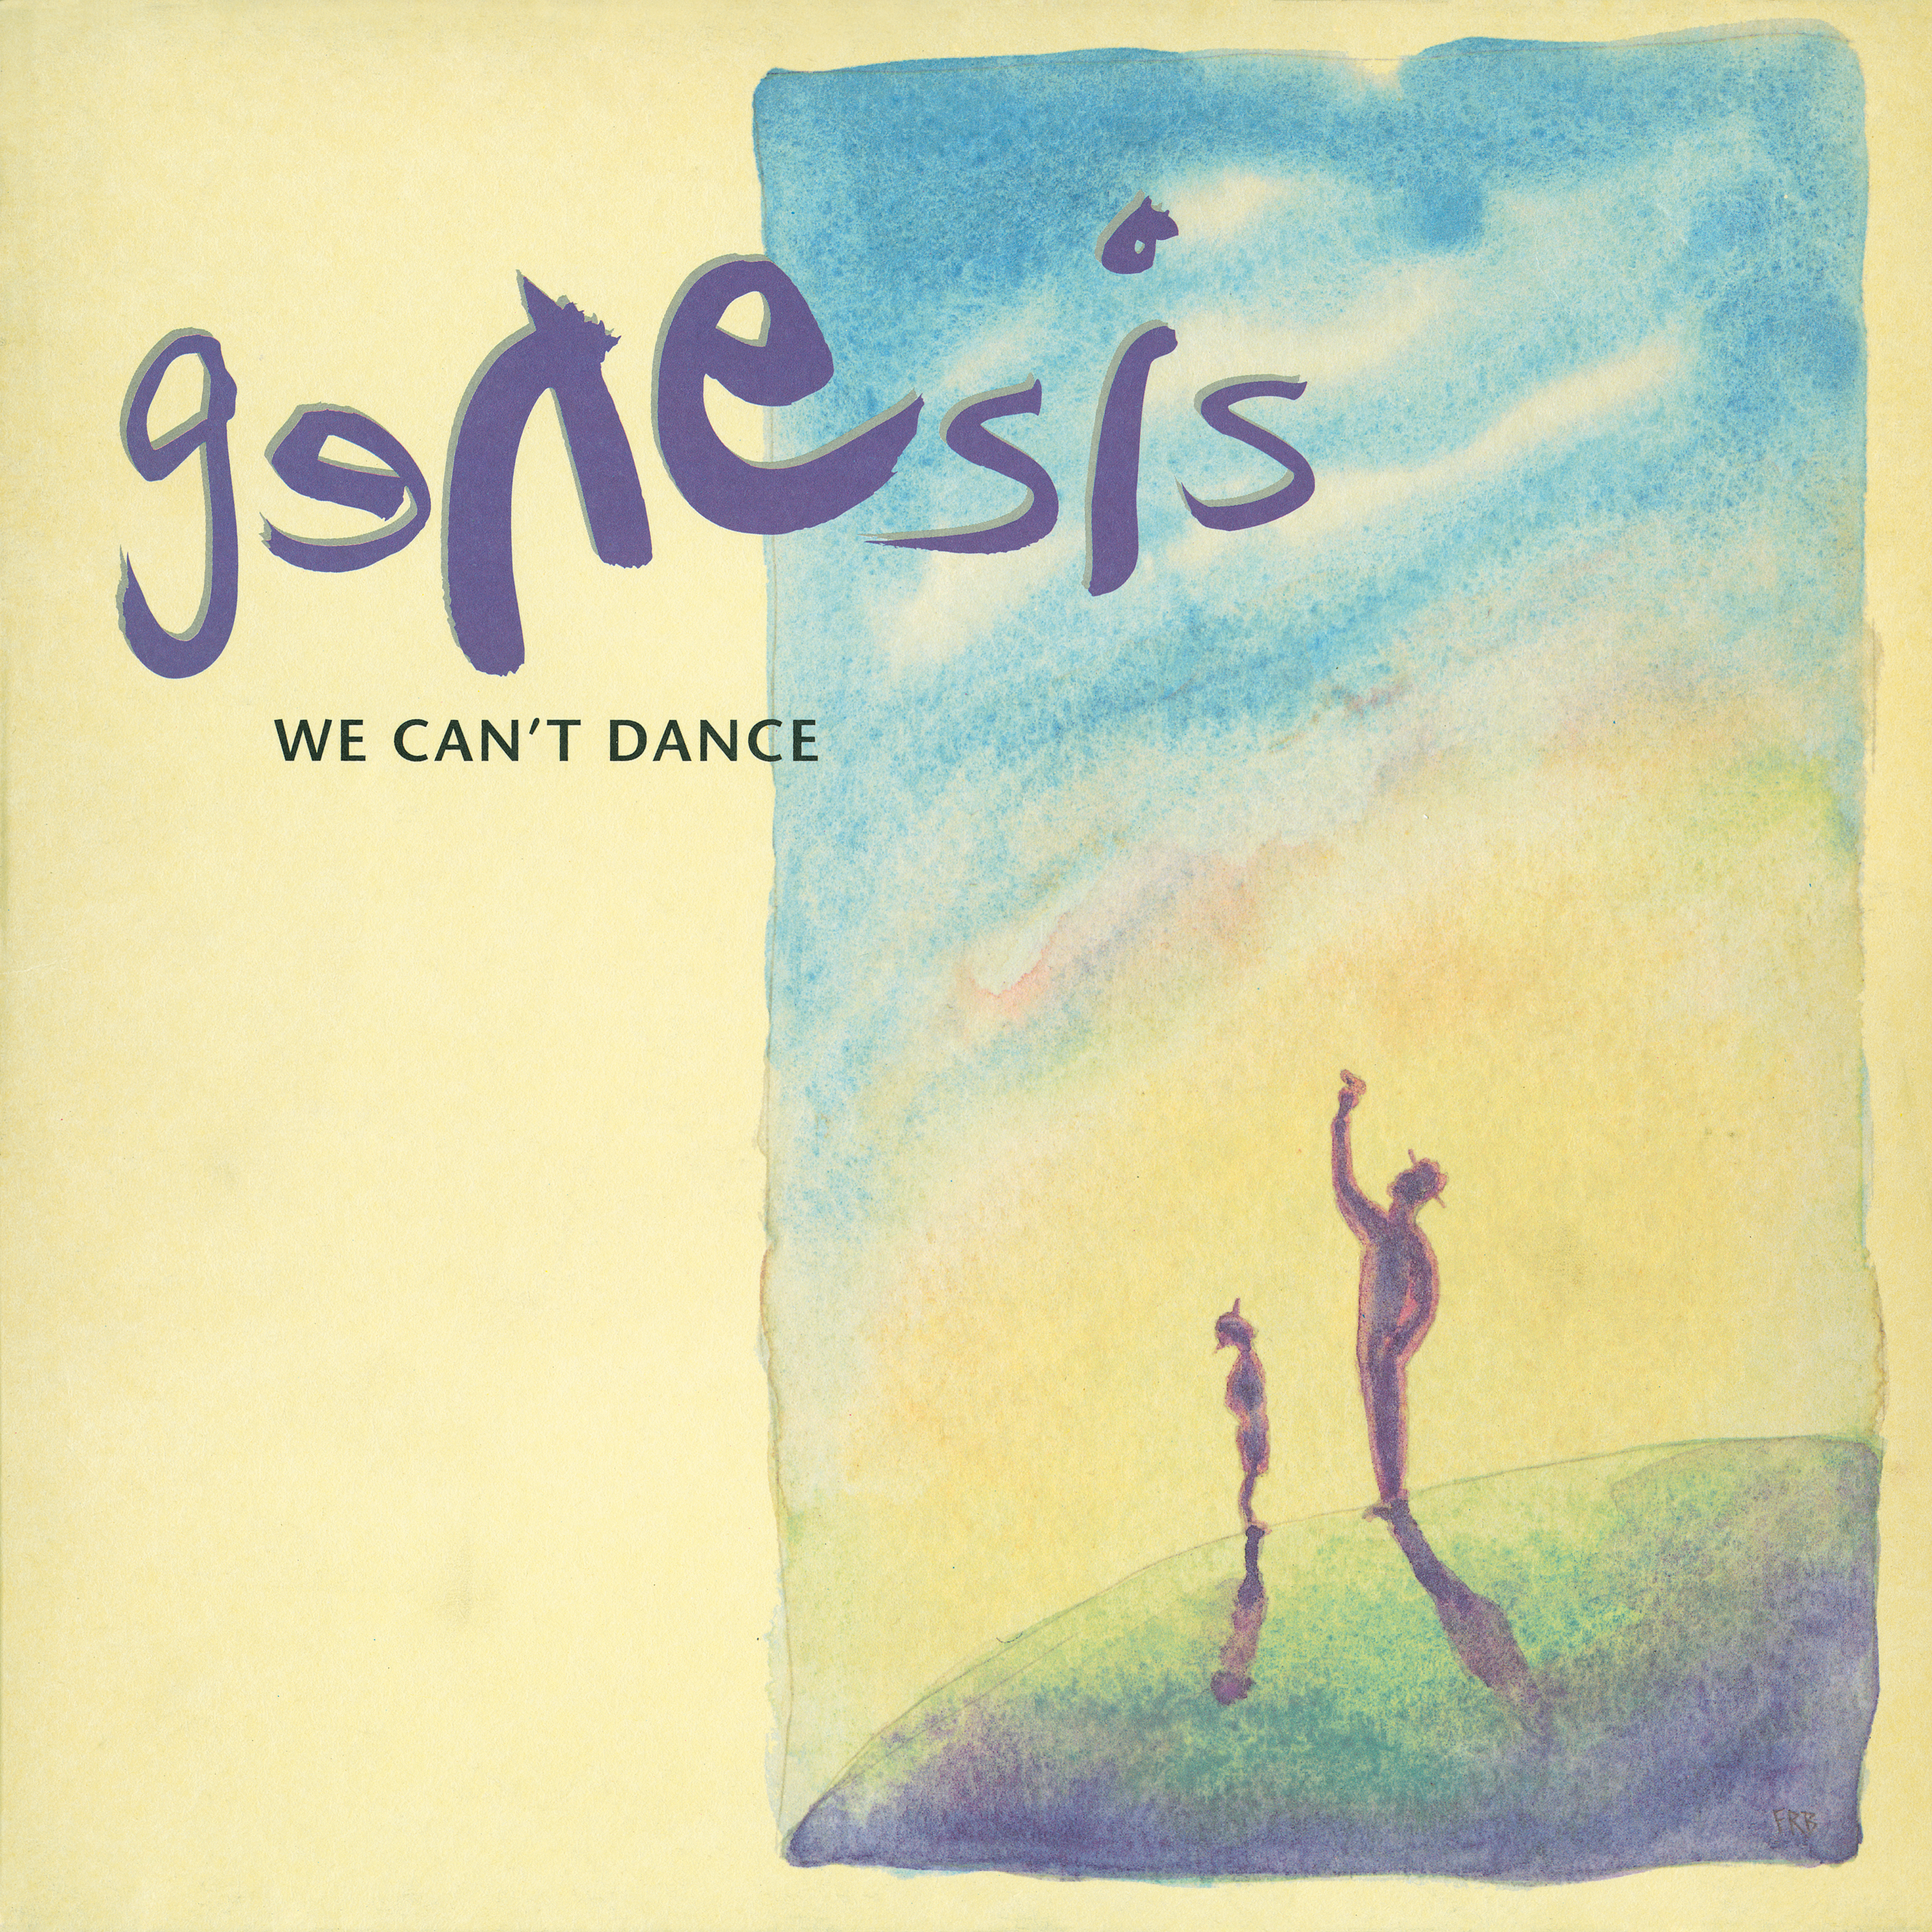 We Can't Dance CD - Genesis